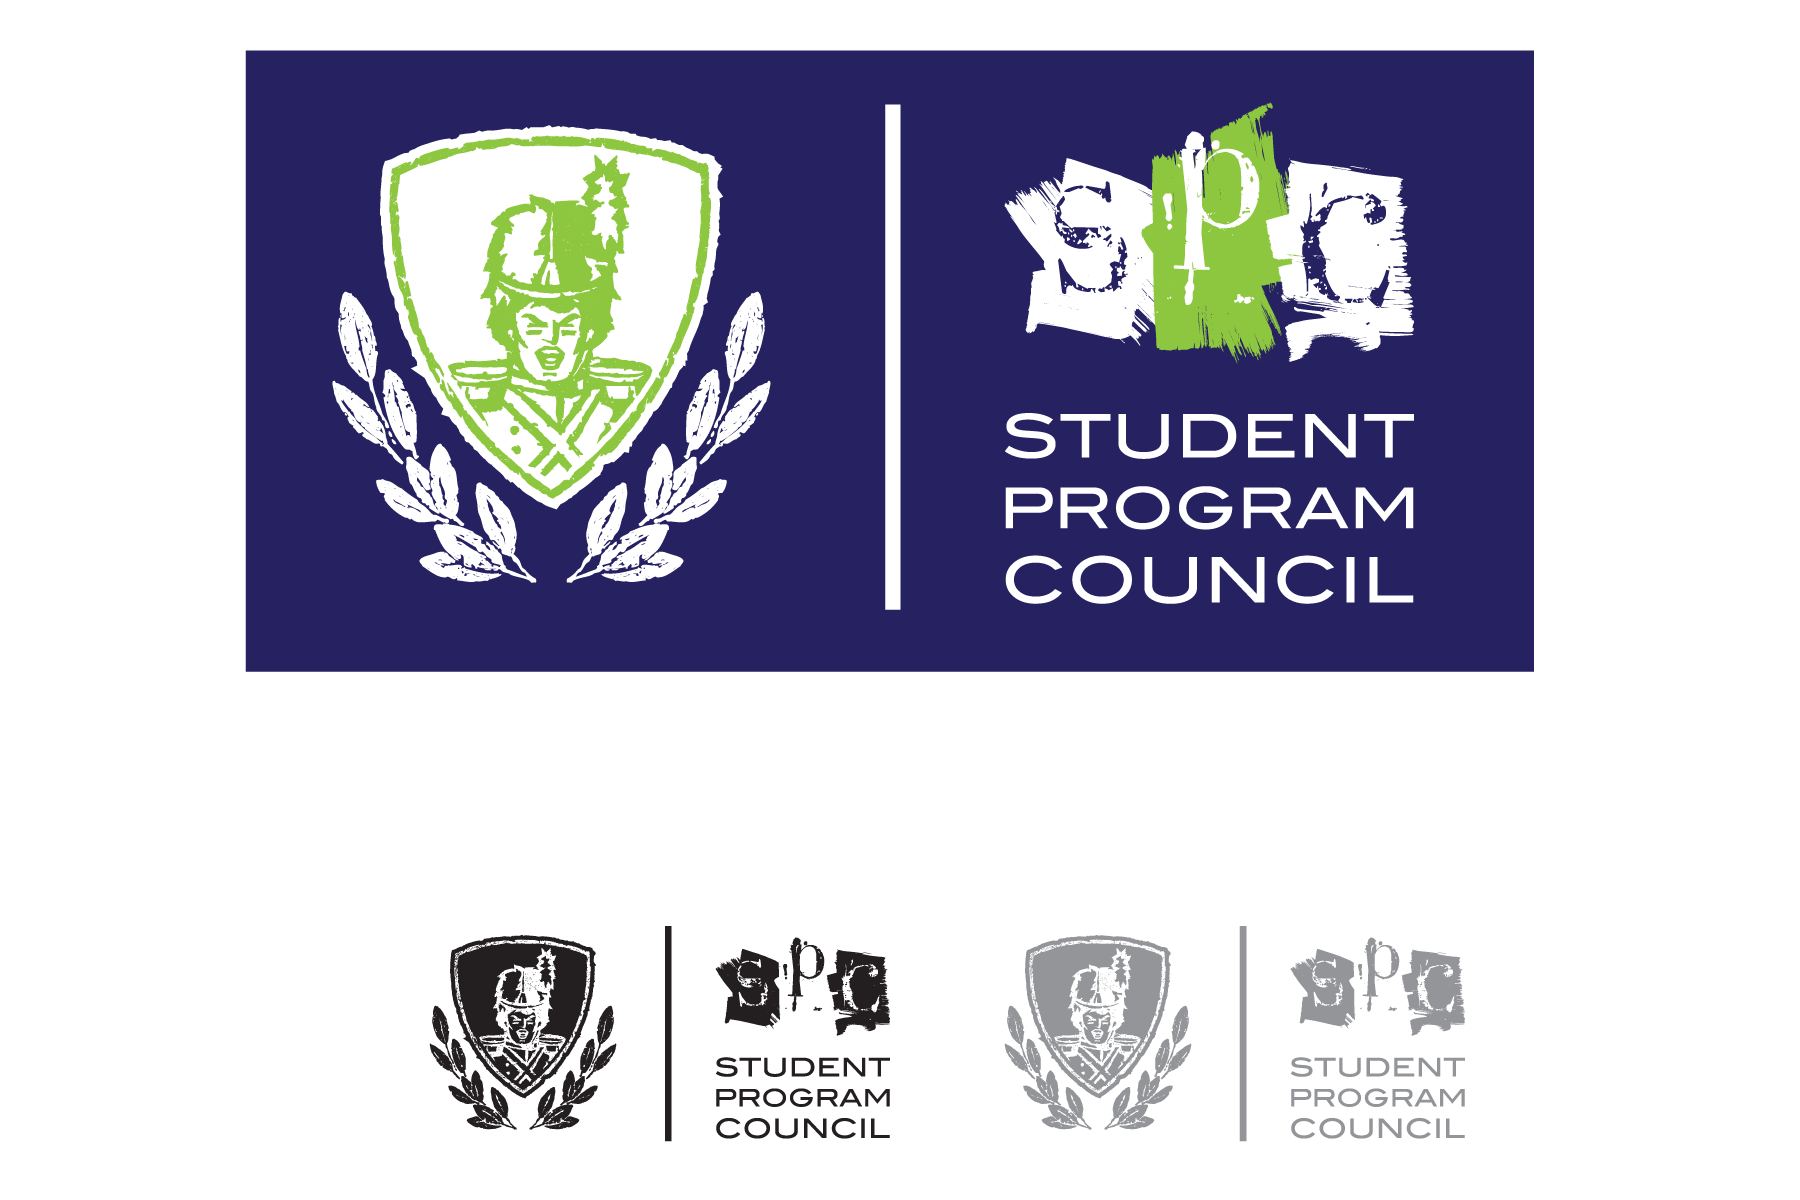 Student Program Council - Identity